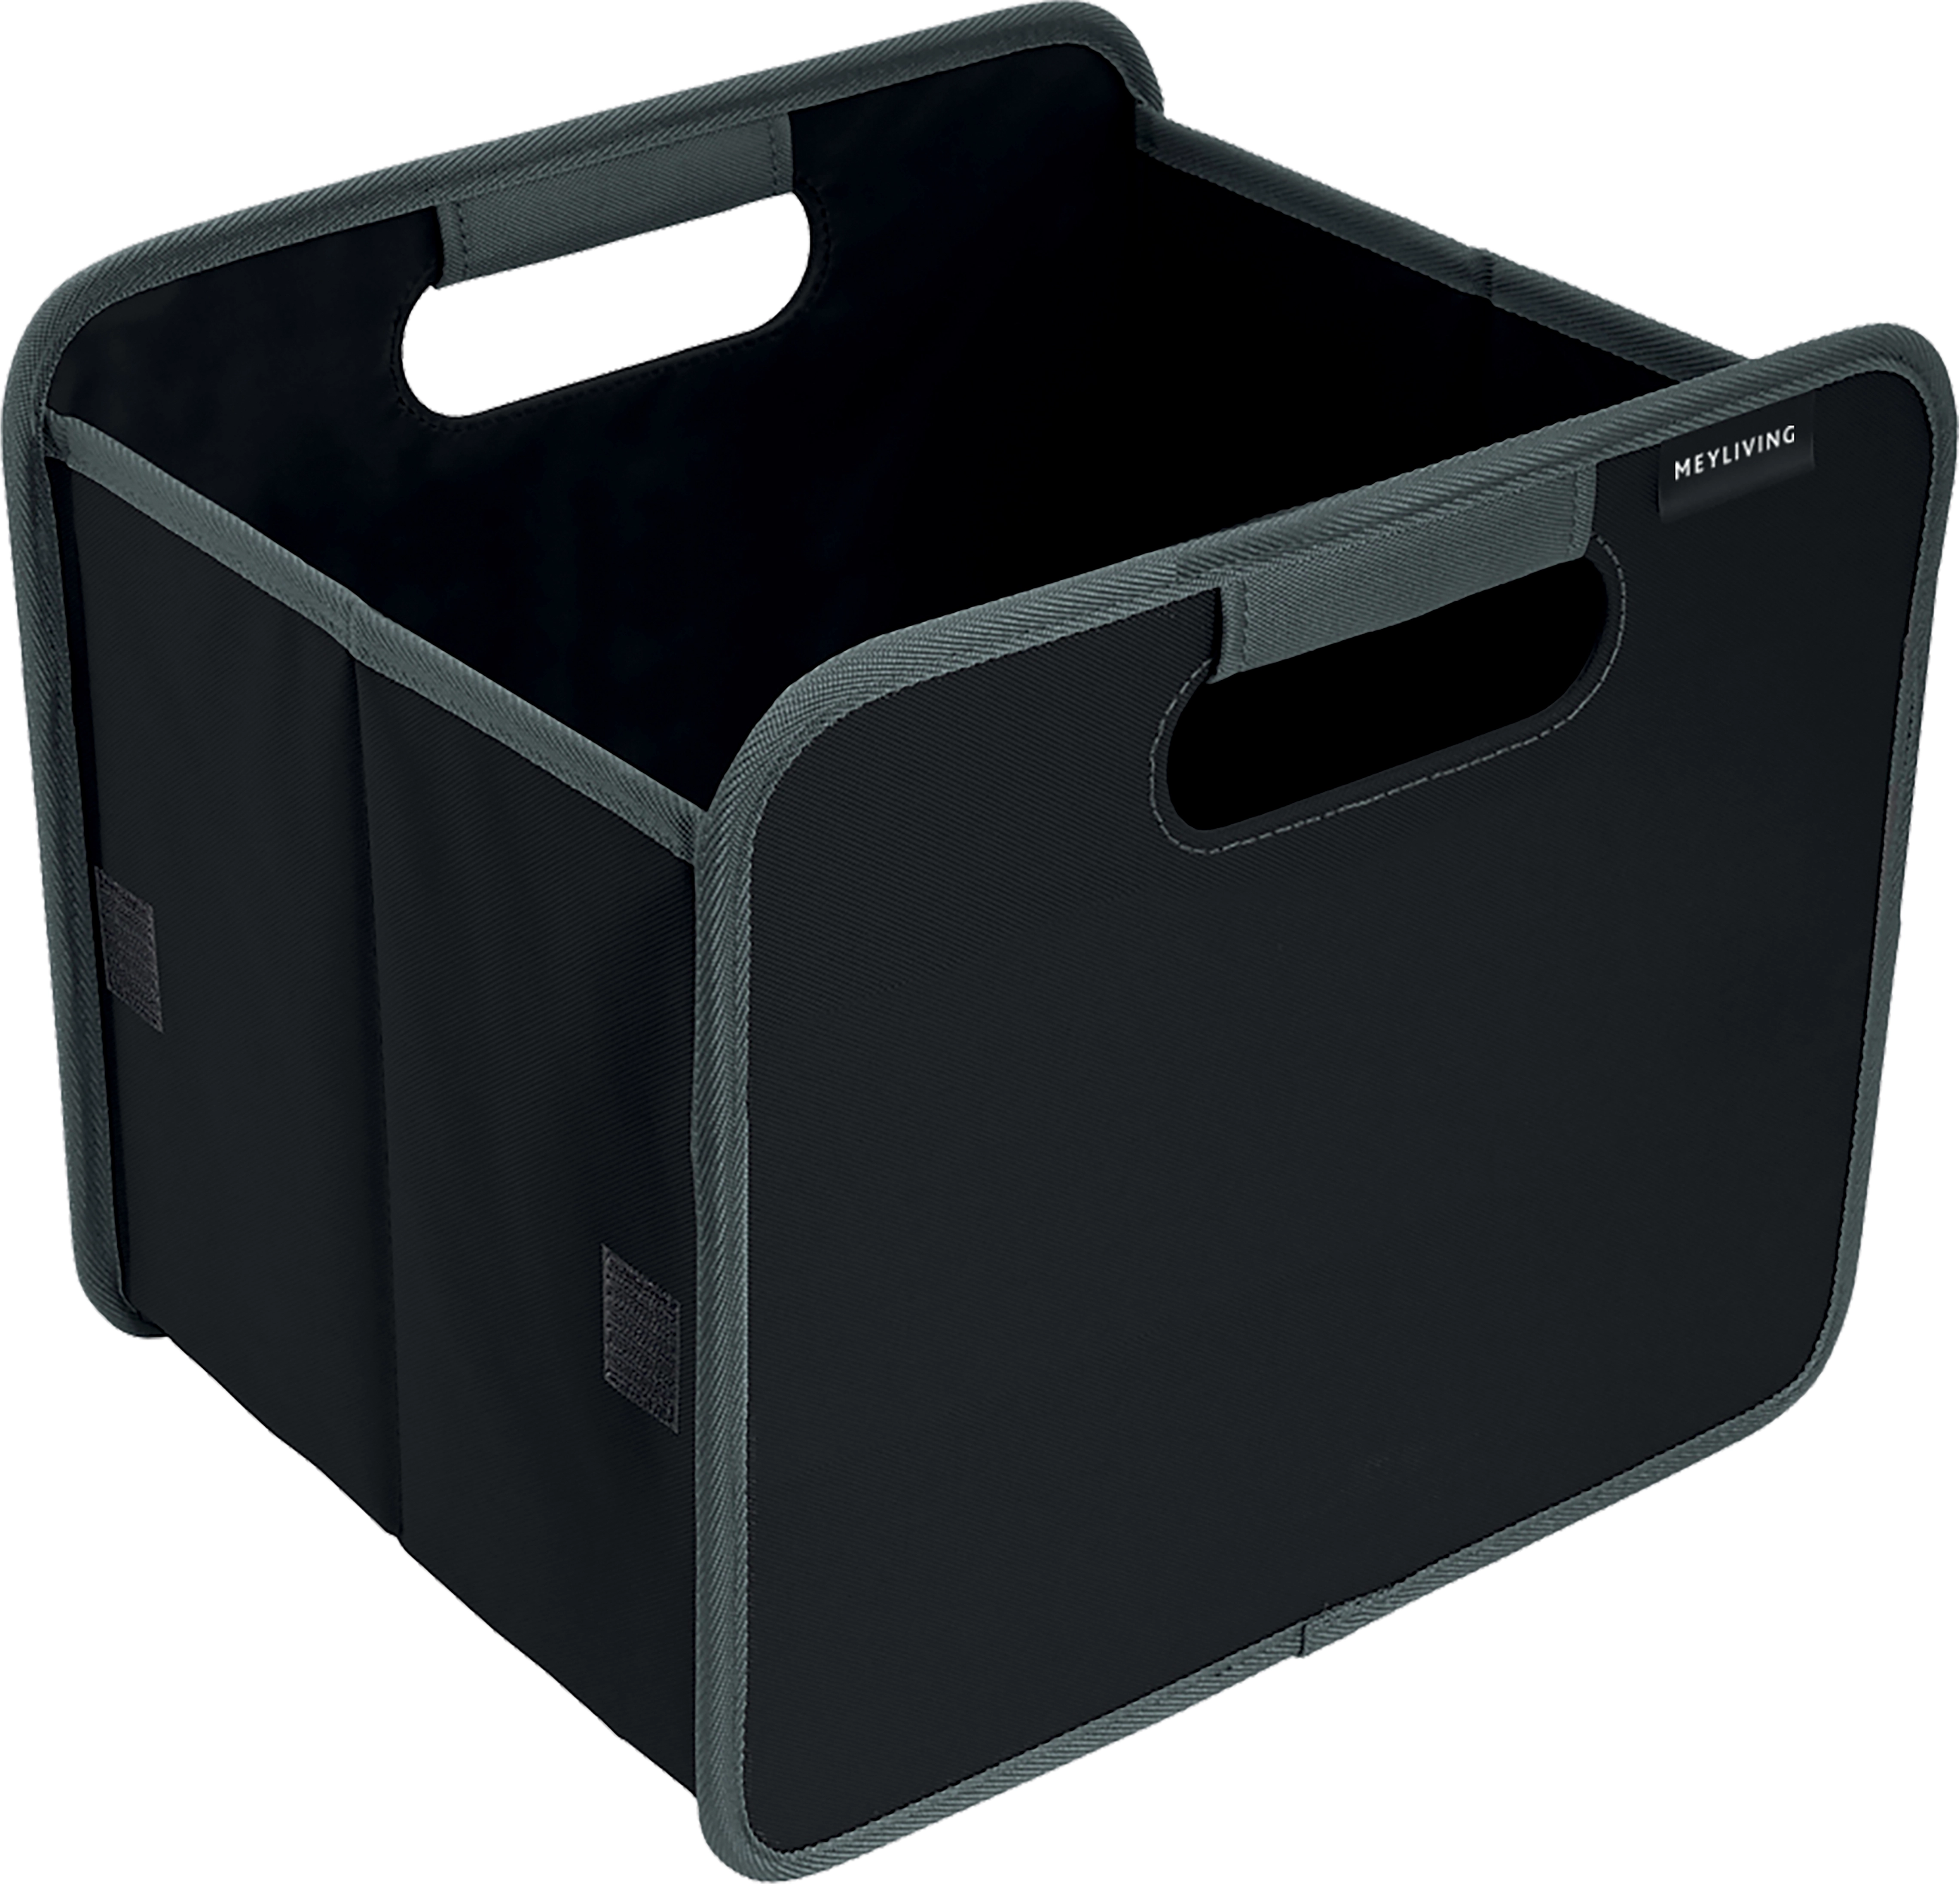 Klappbox Mini Schwarz 3,1 l kaufen bei OBI